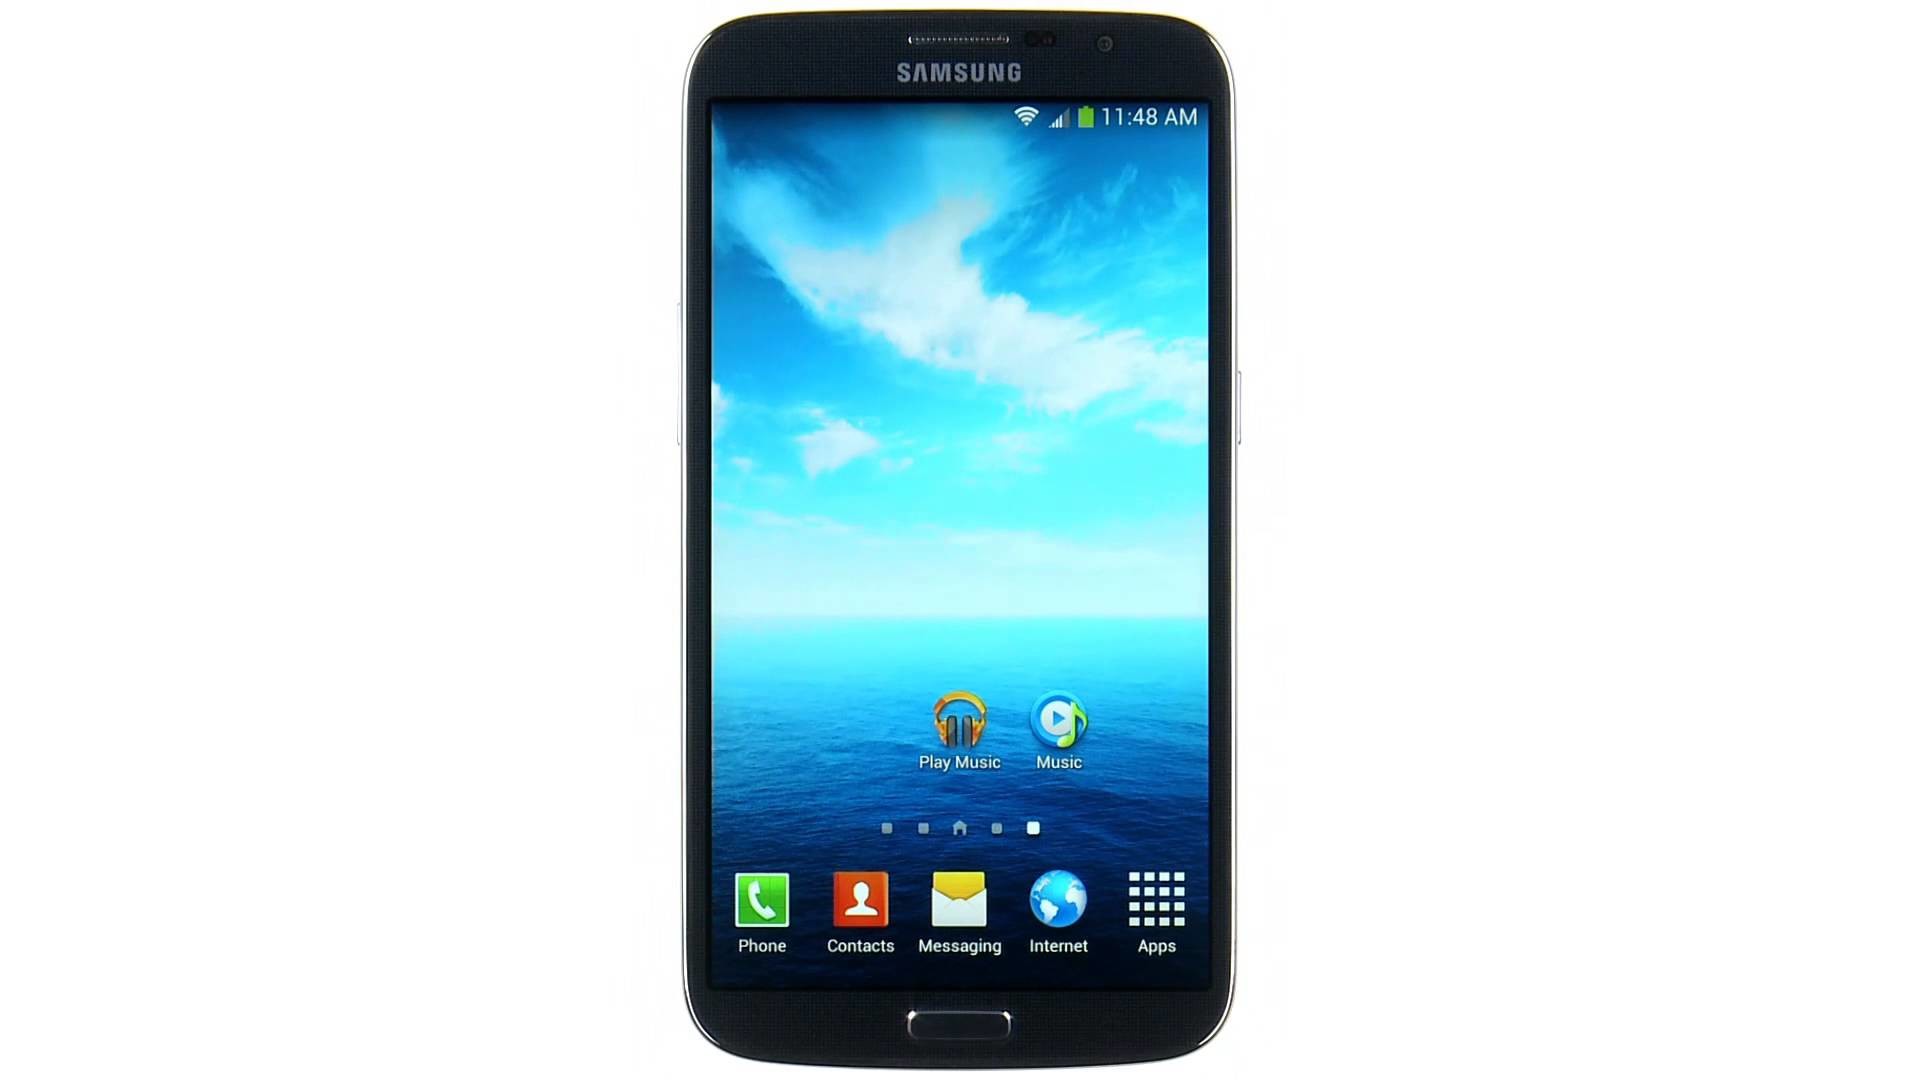 Device Customization – Samsung Galaxy Mega Metro PCS, SGH M819N